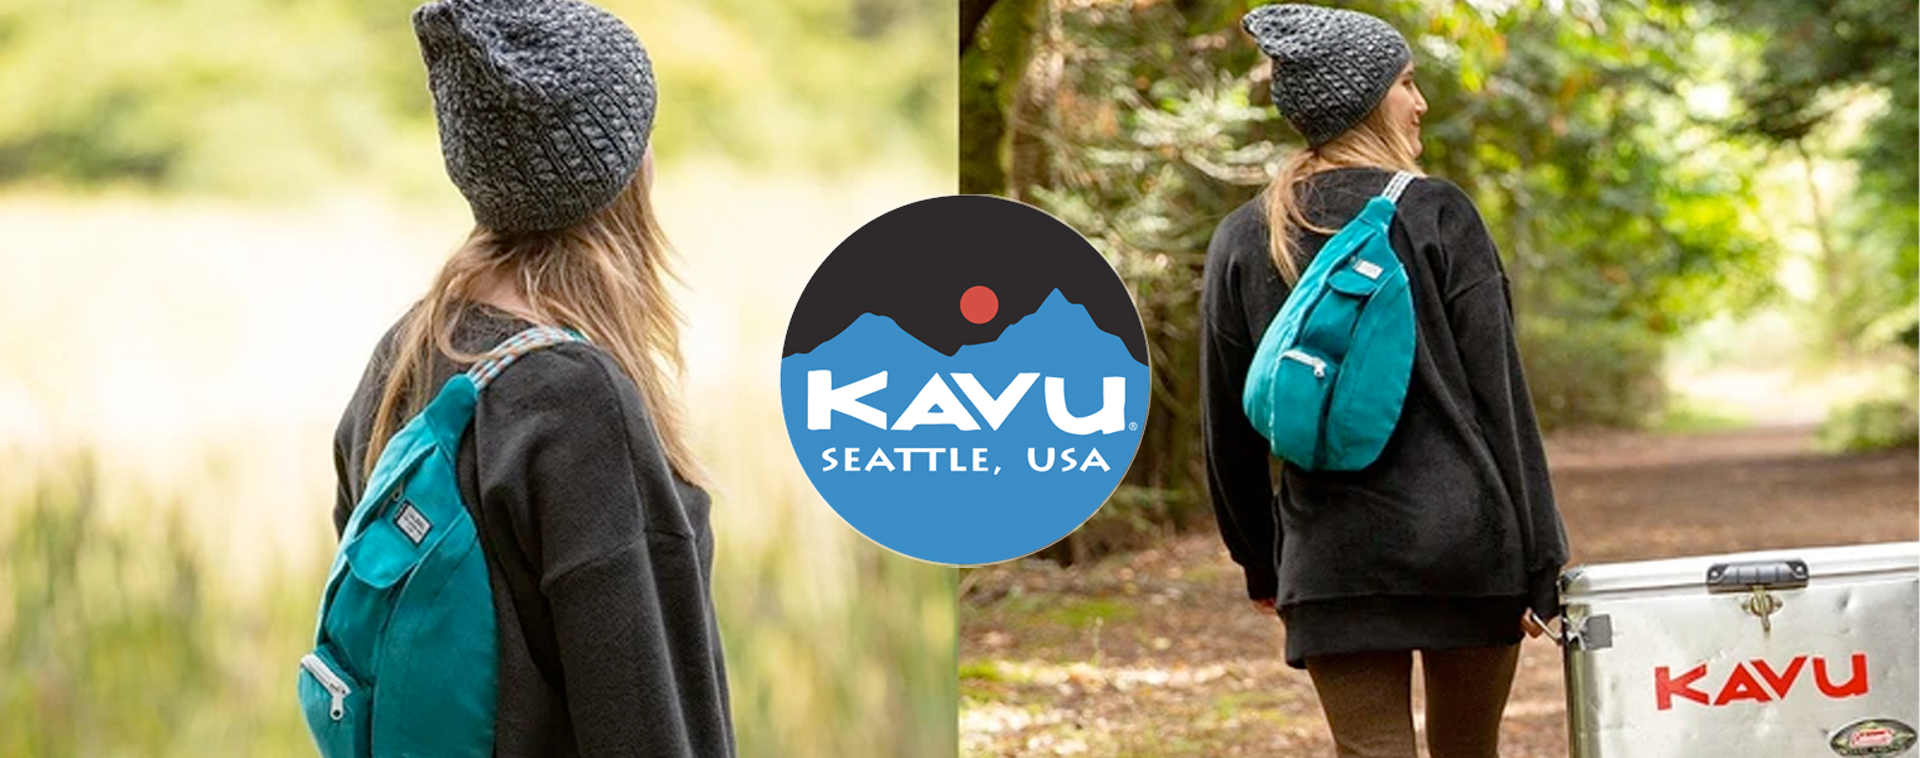 KAVU – Mountain High Outfitters